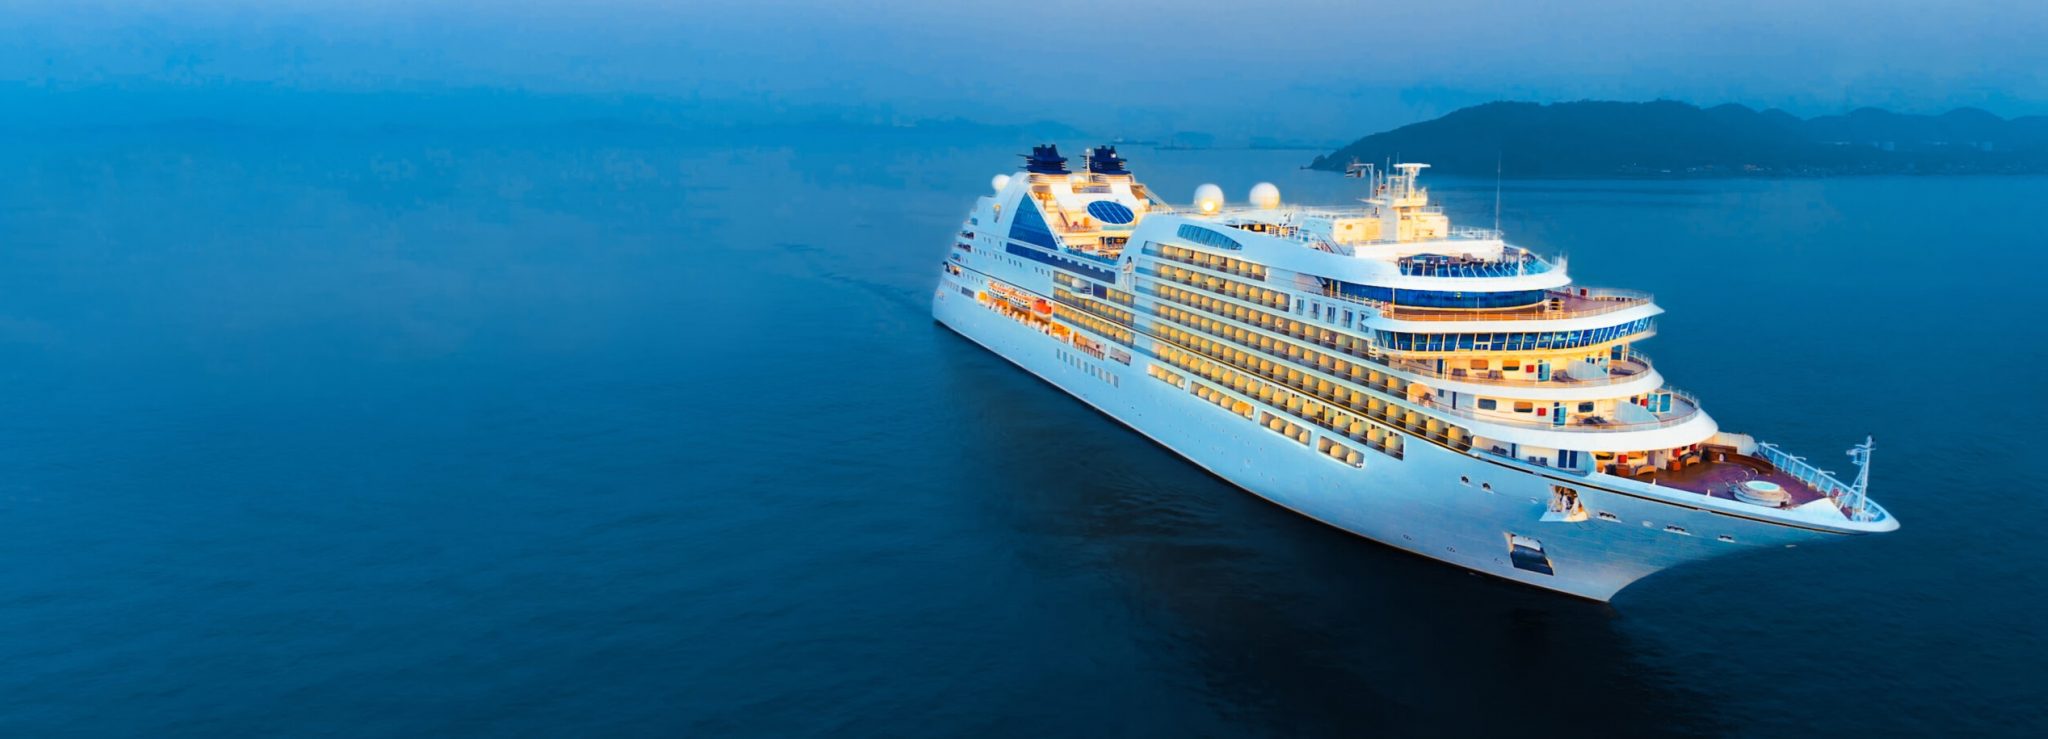 cruise ship course hotel management